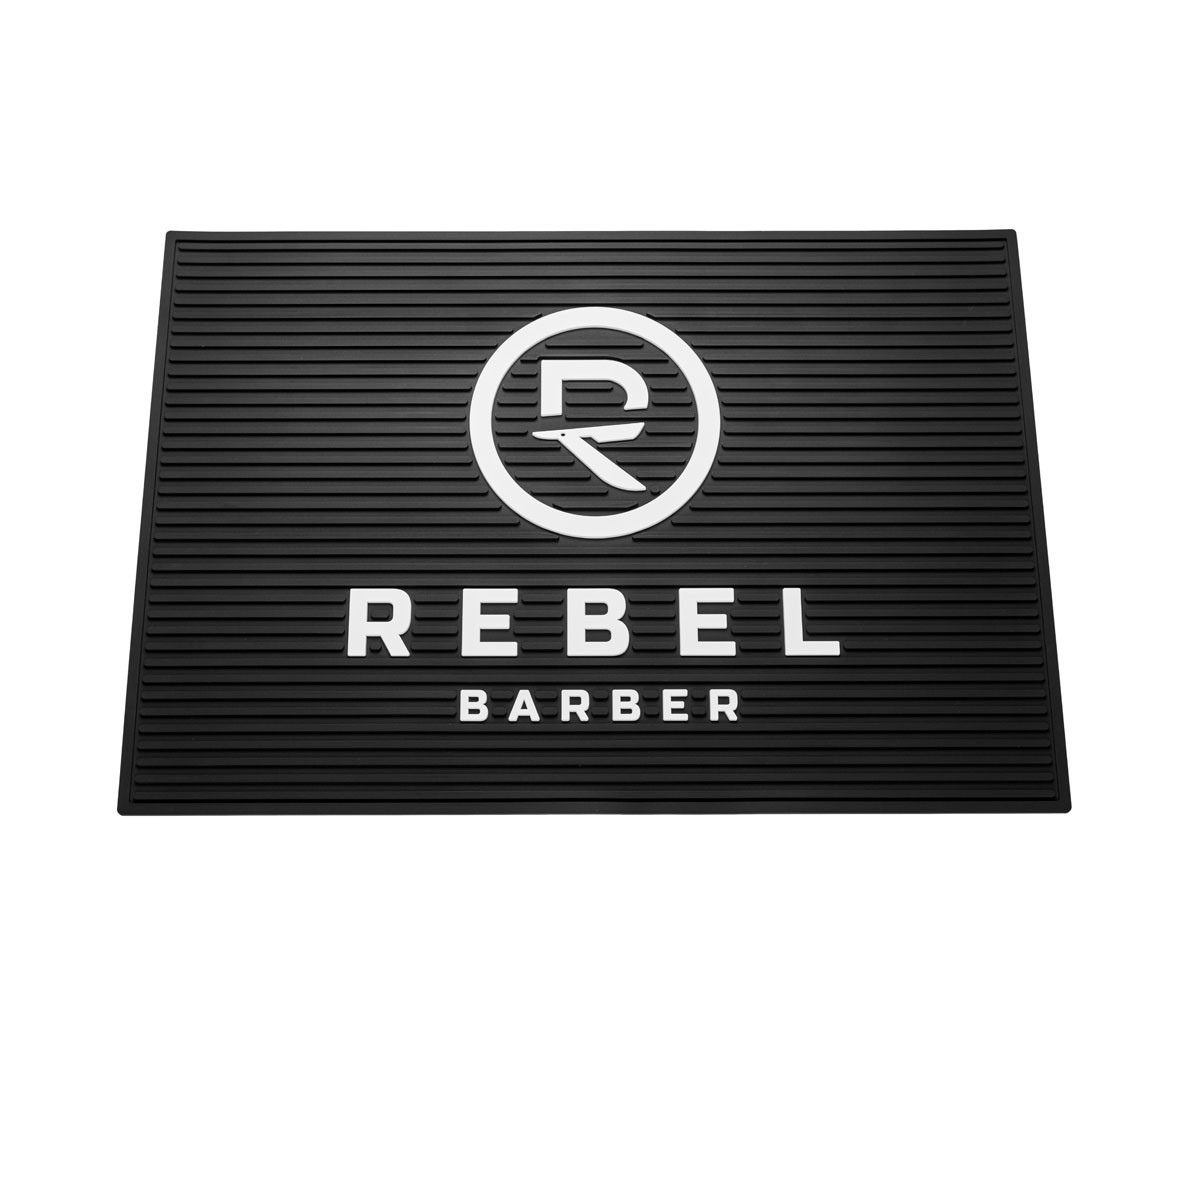 Коврик для инструментов REBEL BARBER Black&White Large